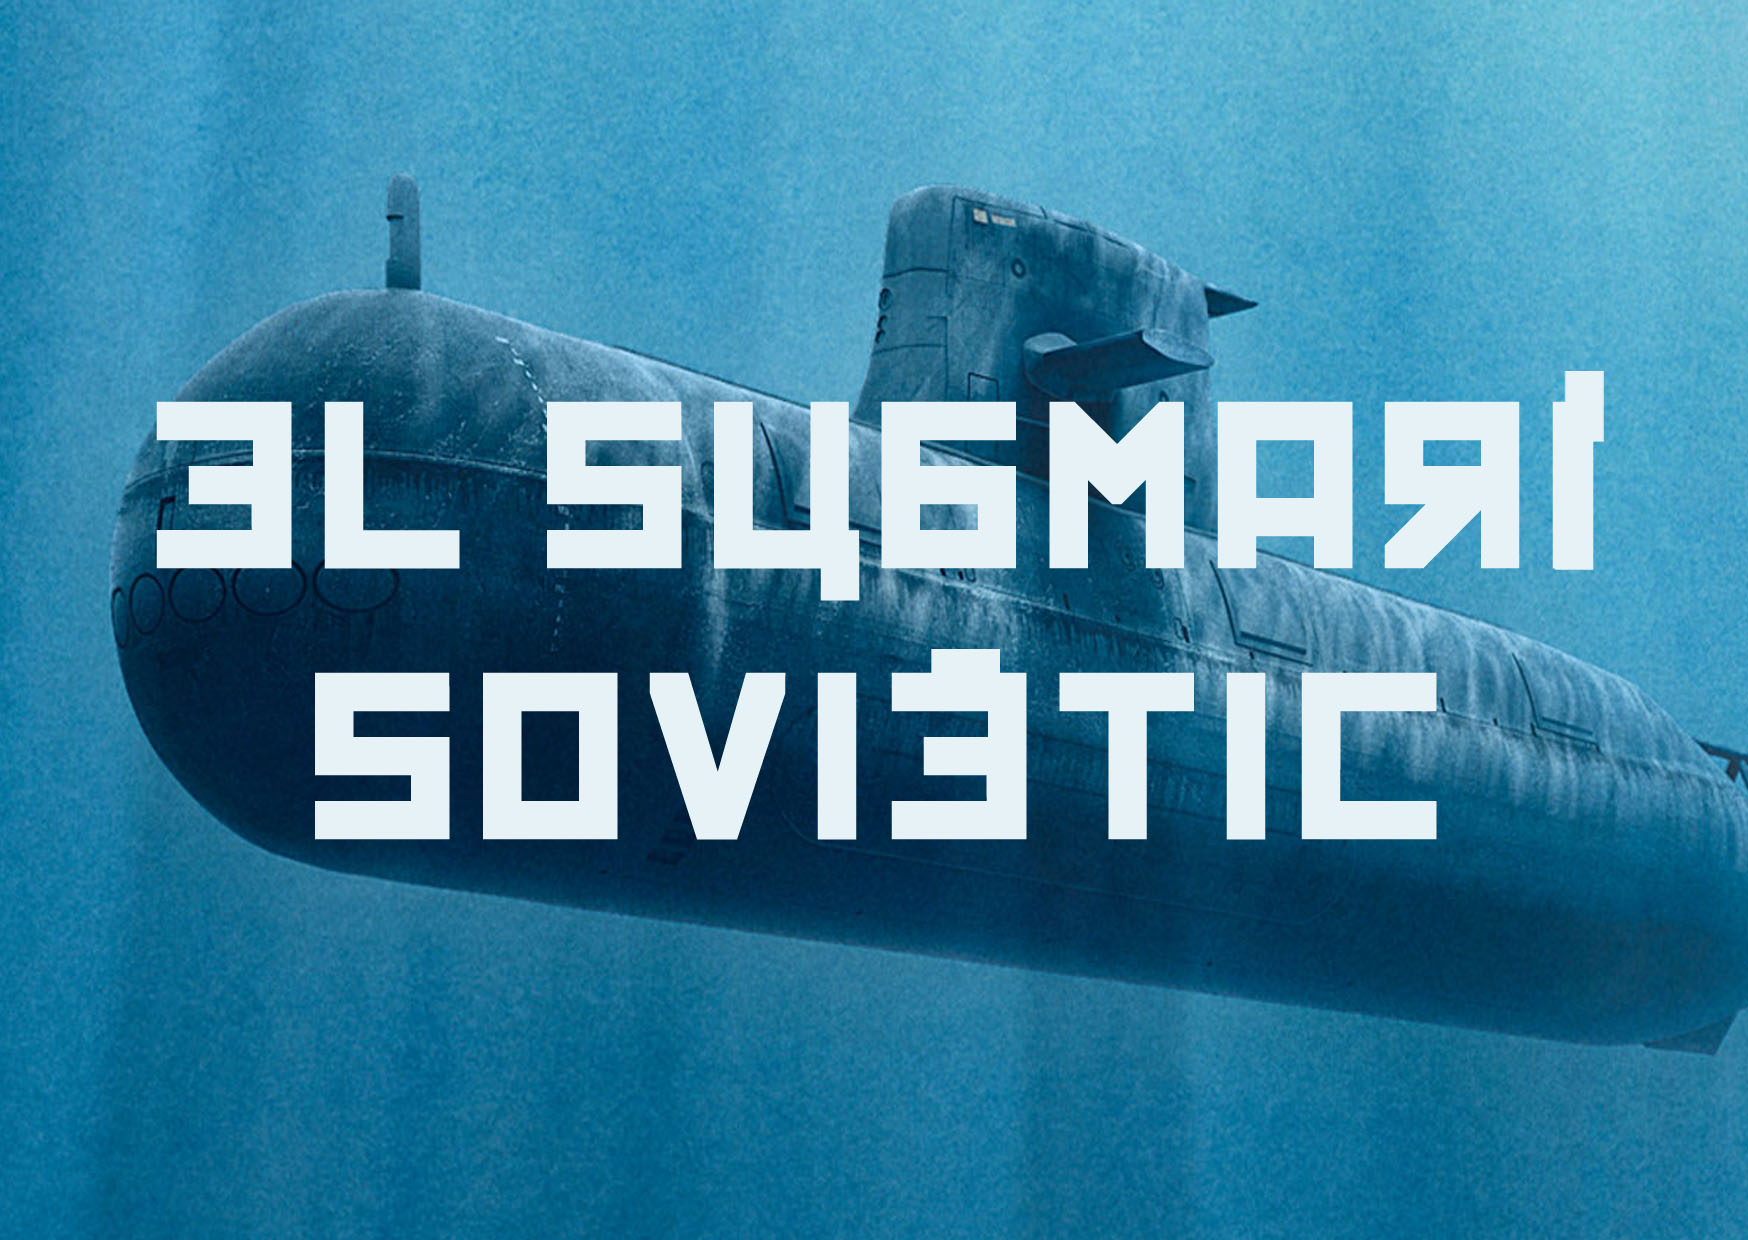 El submarino soviético